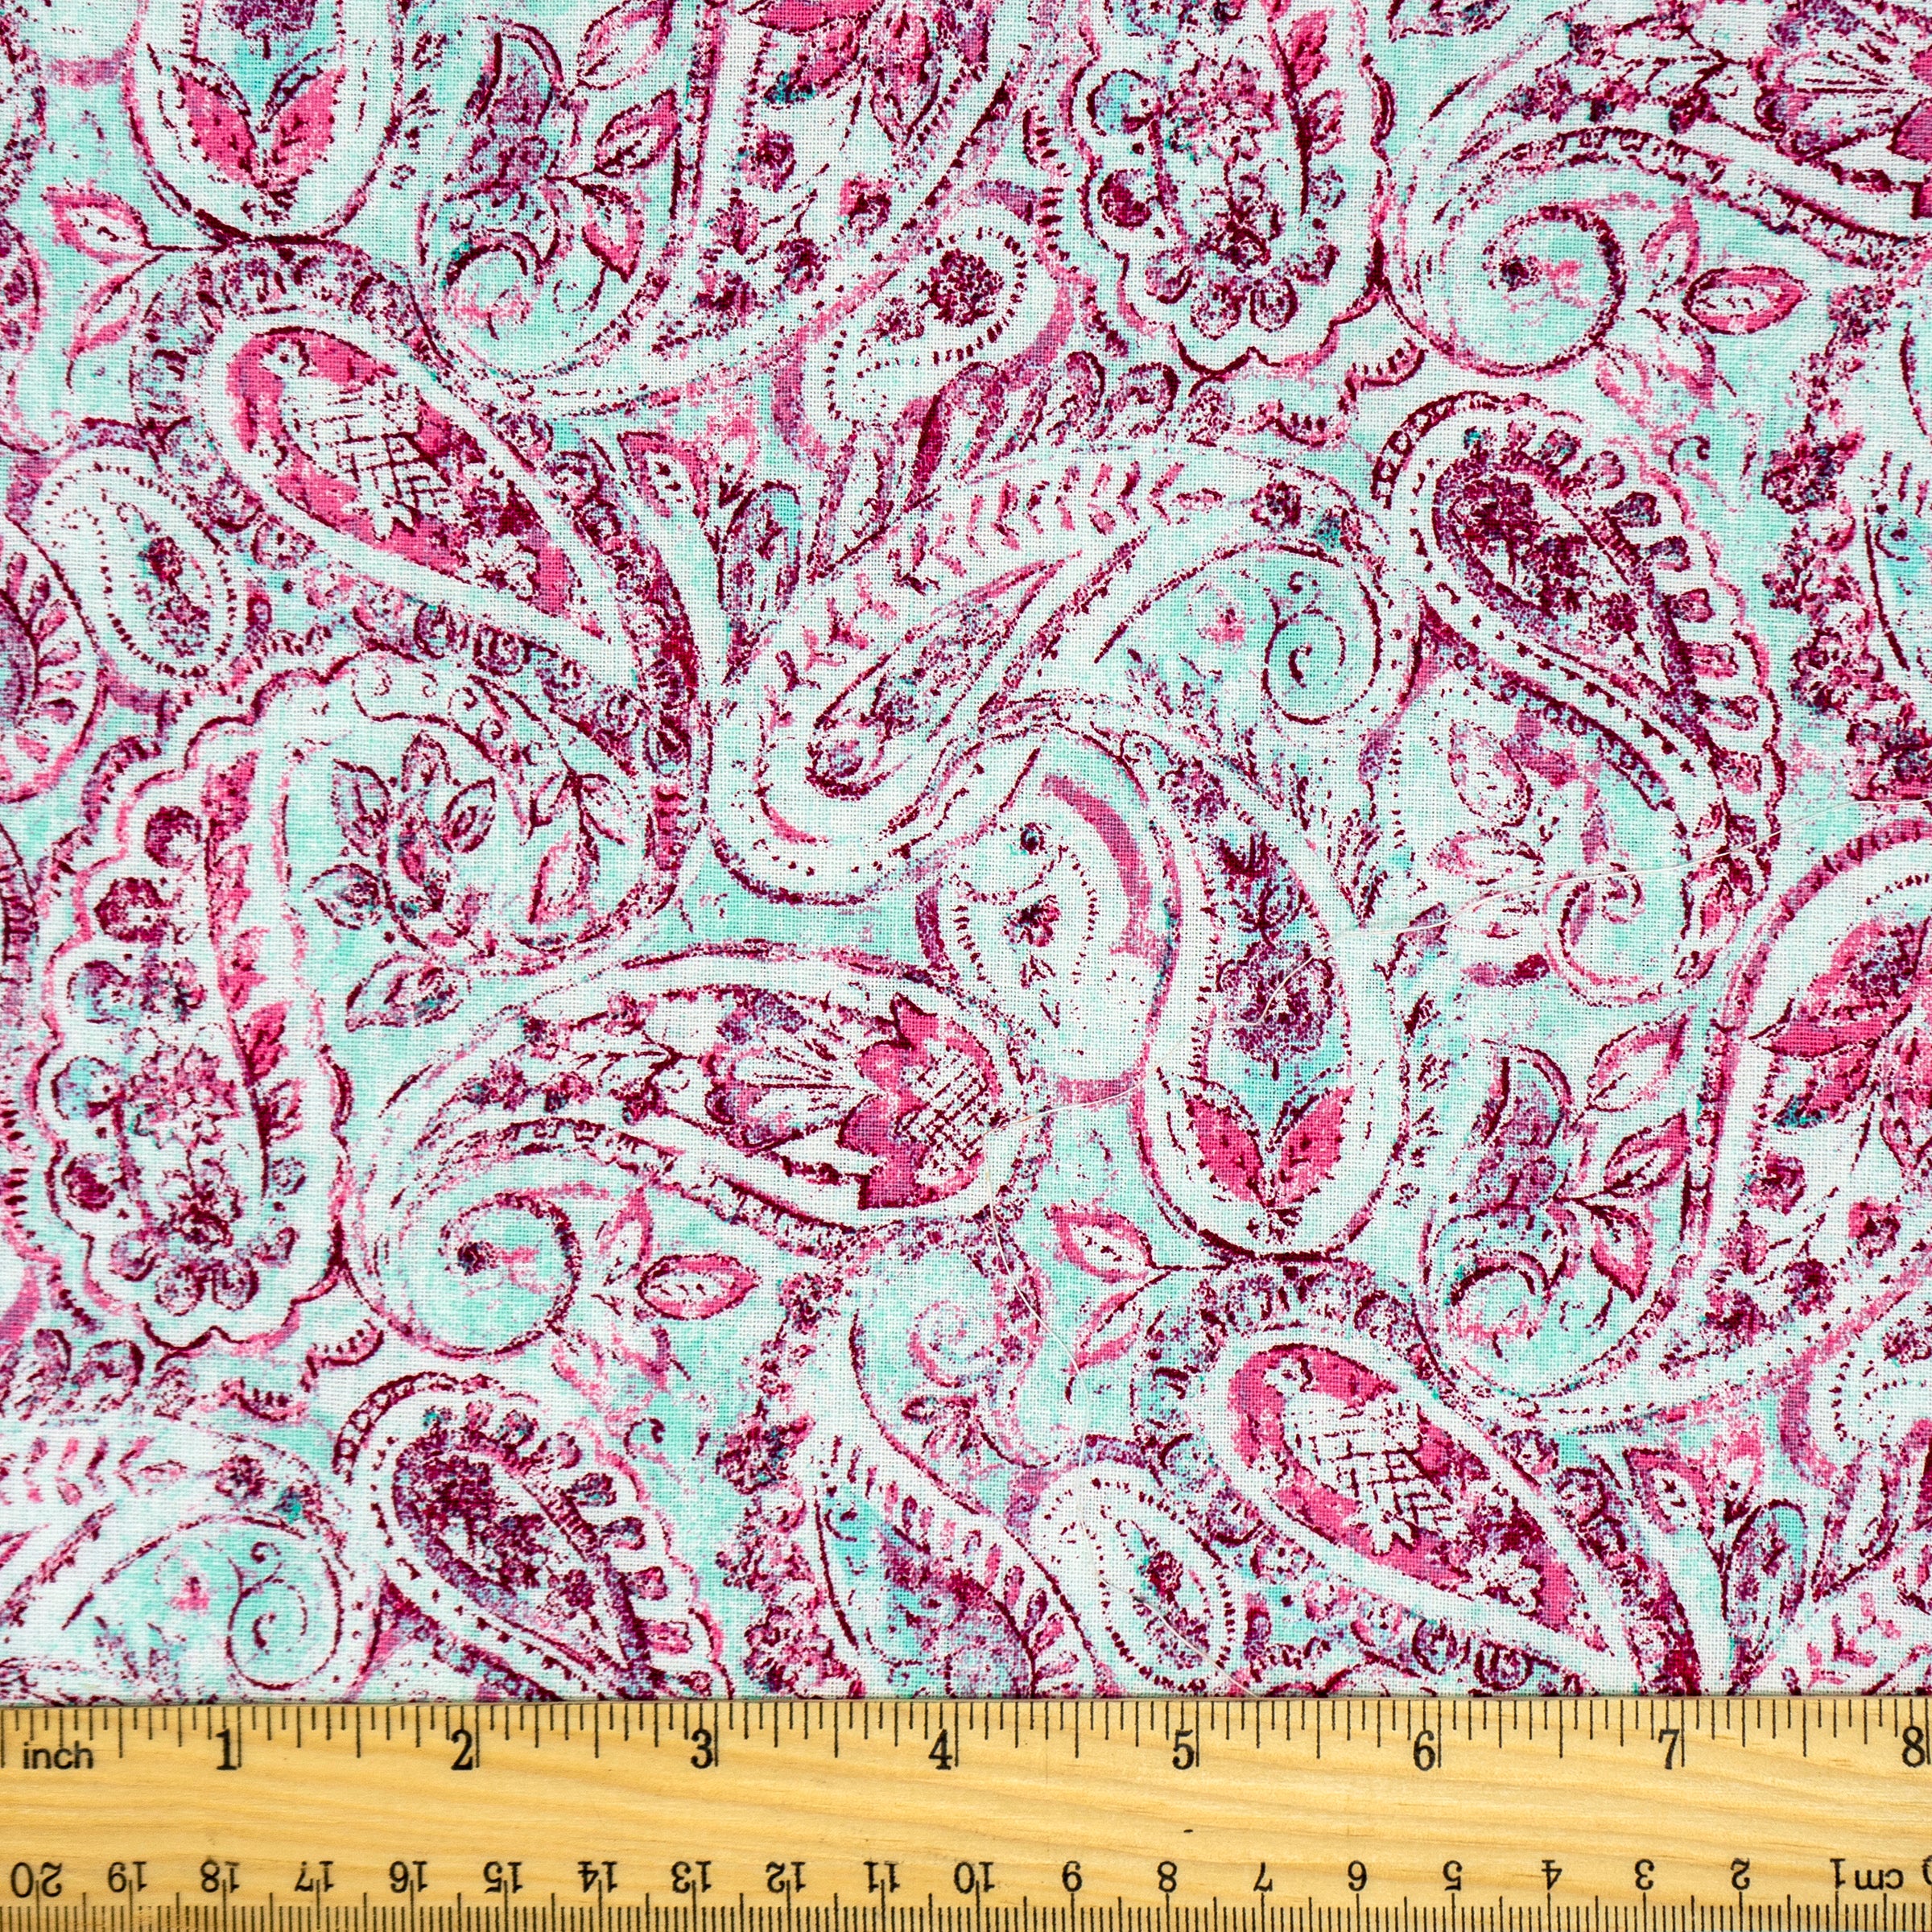 Waverly Inspirations 44" 100% Cotton Paisley Swirl Sewing & Craft Fabric By the Yard, White, Magenta